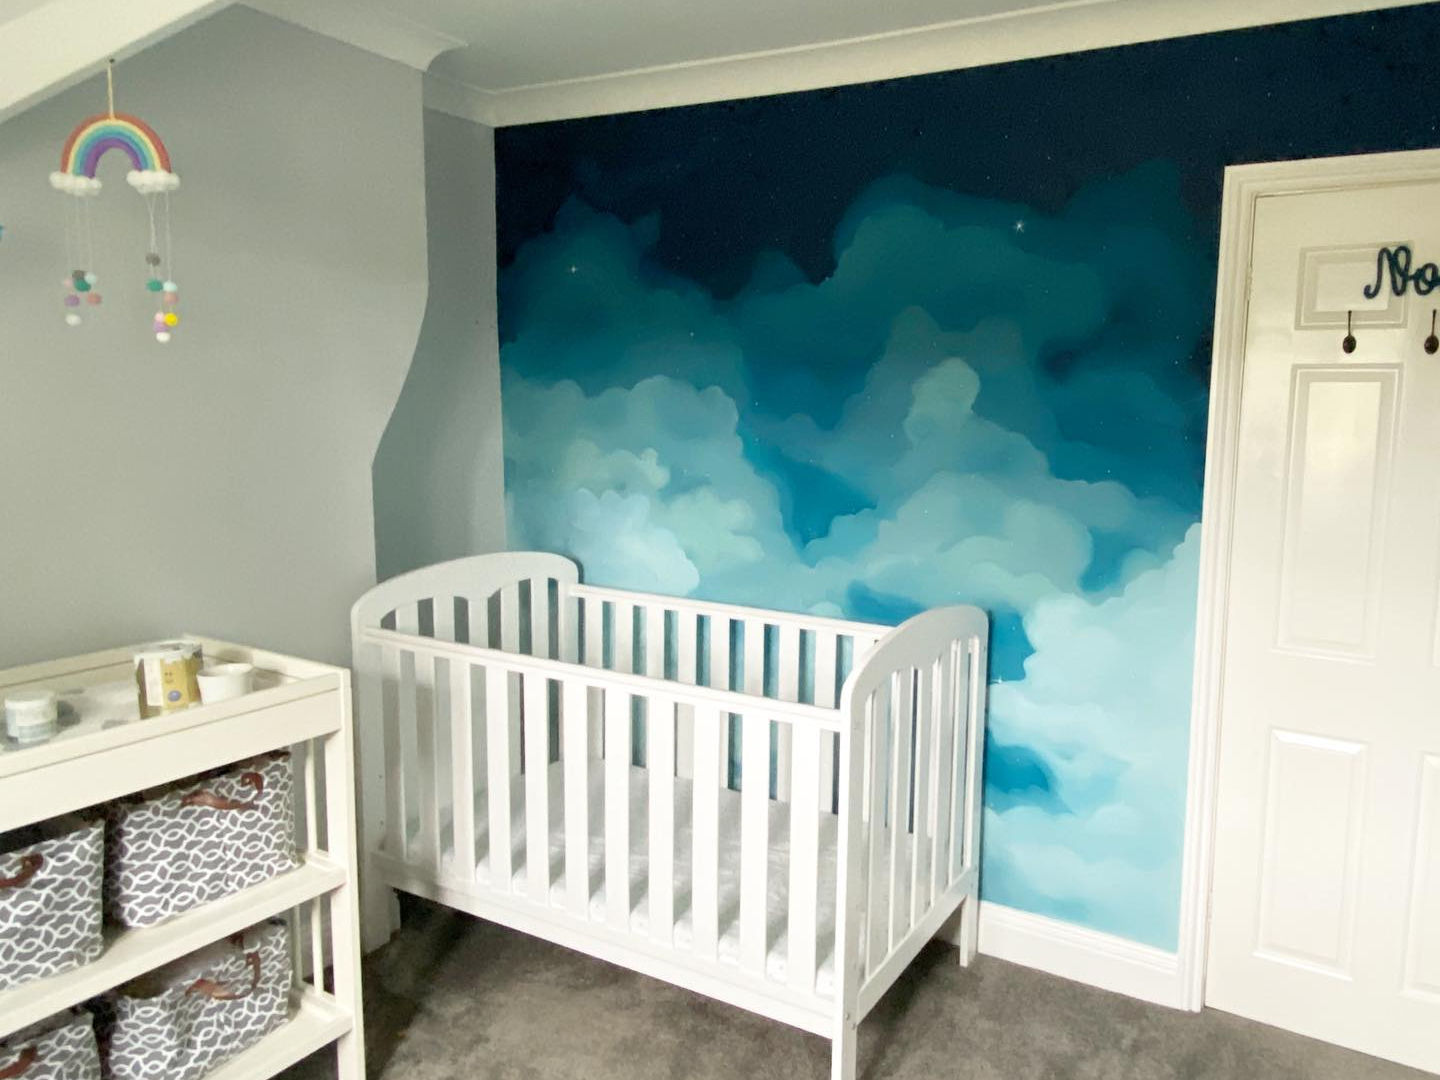 Dreamy nursery bedroom sky at night